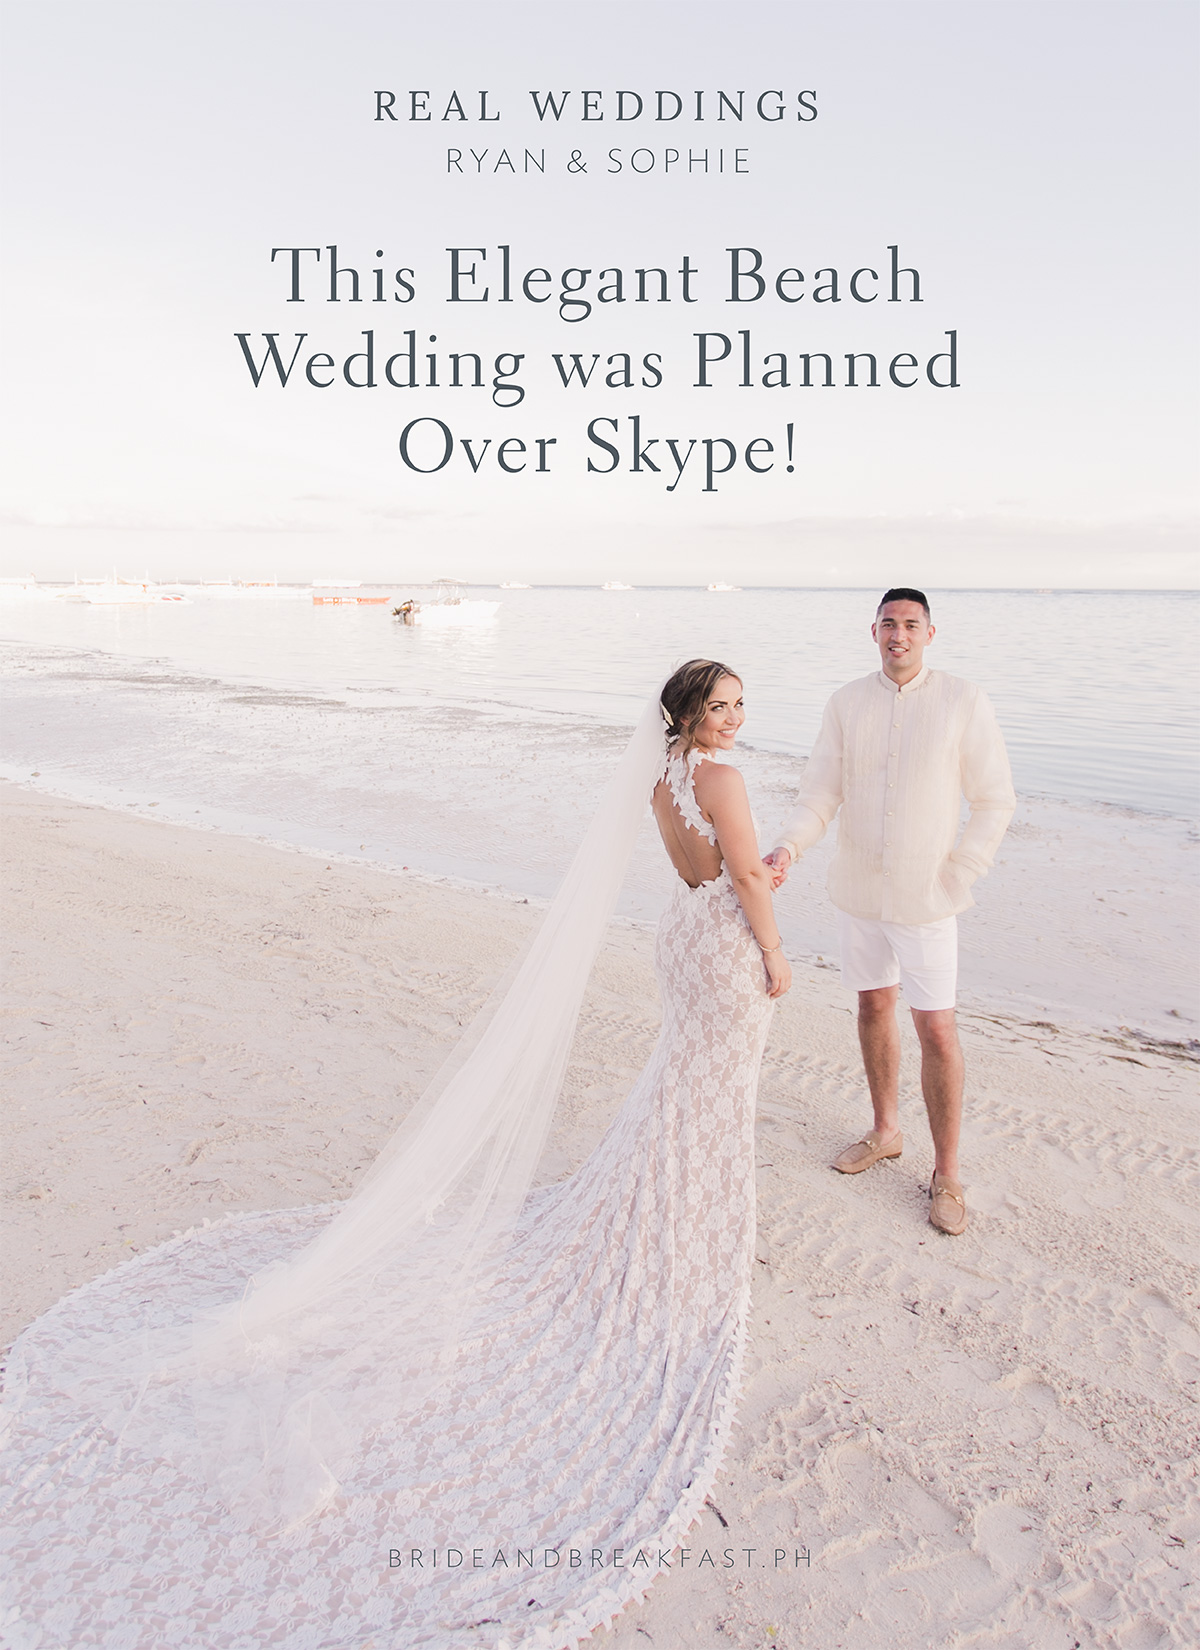 This Elegant Beach Wedding was Planned Over Skype!